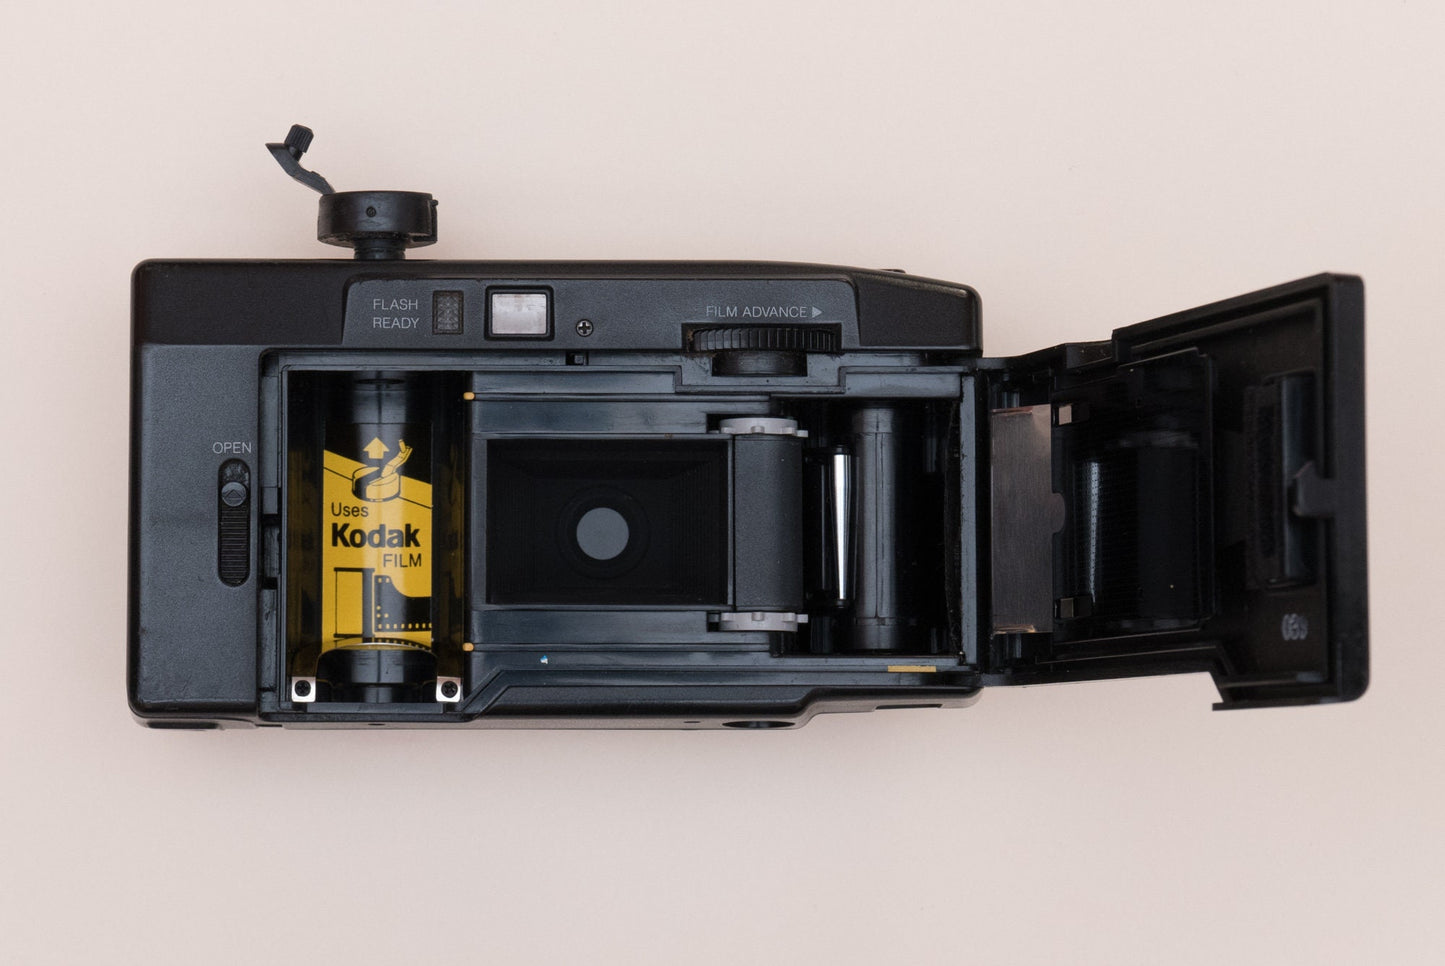 Kodak S 100 EF 35mm Compact Point and Shoot Film Camera